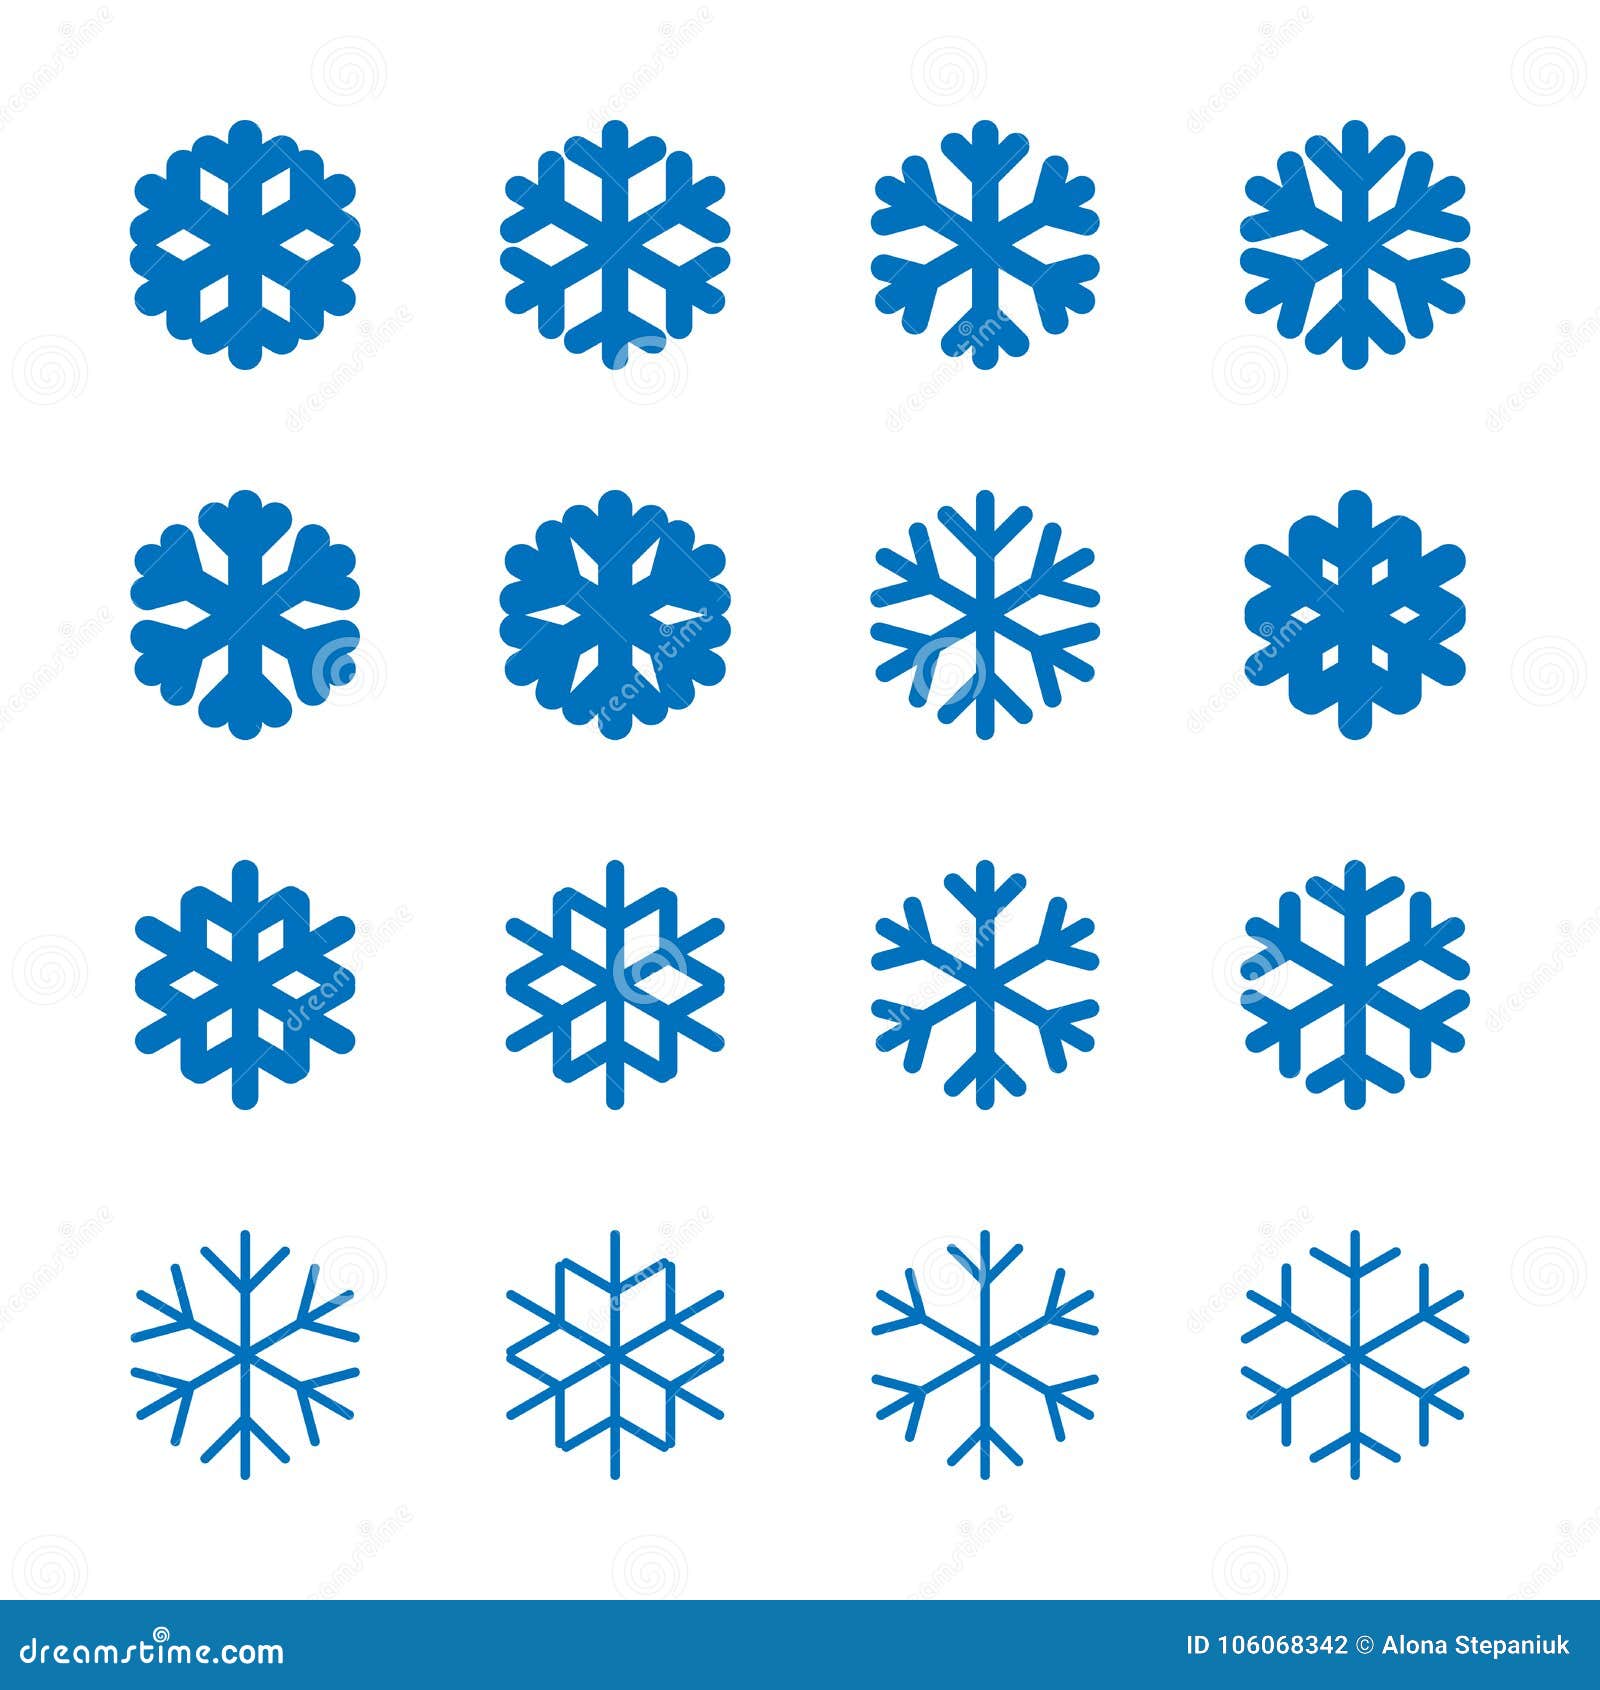 snowflakes signs set. blue snowflake icons  on white background. snow flake silhouettes.  of snow, holiday